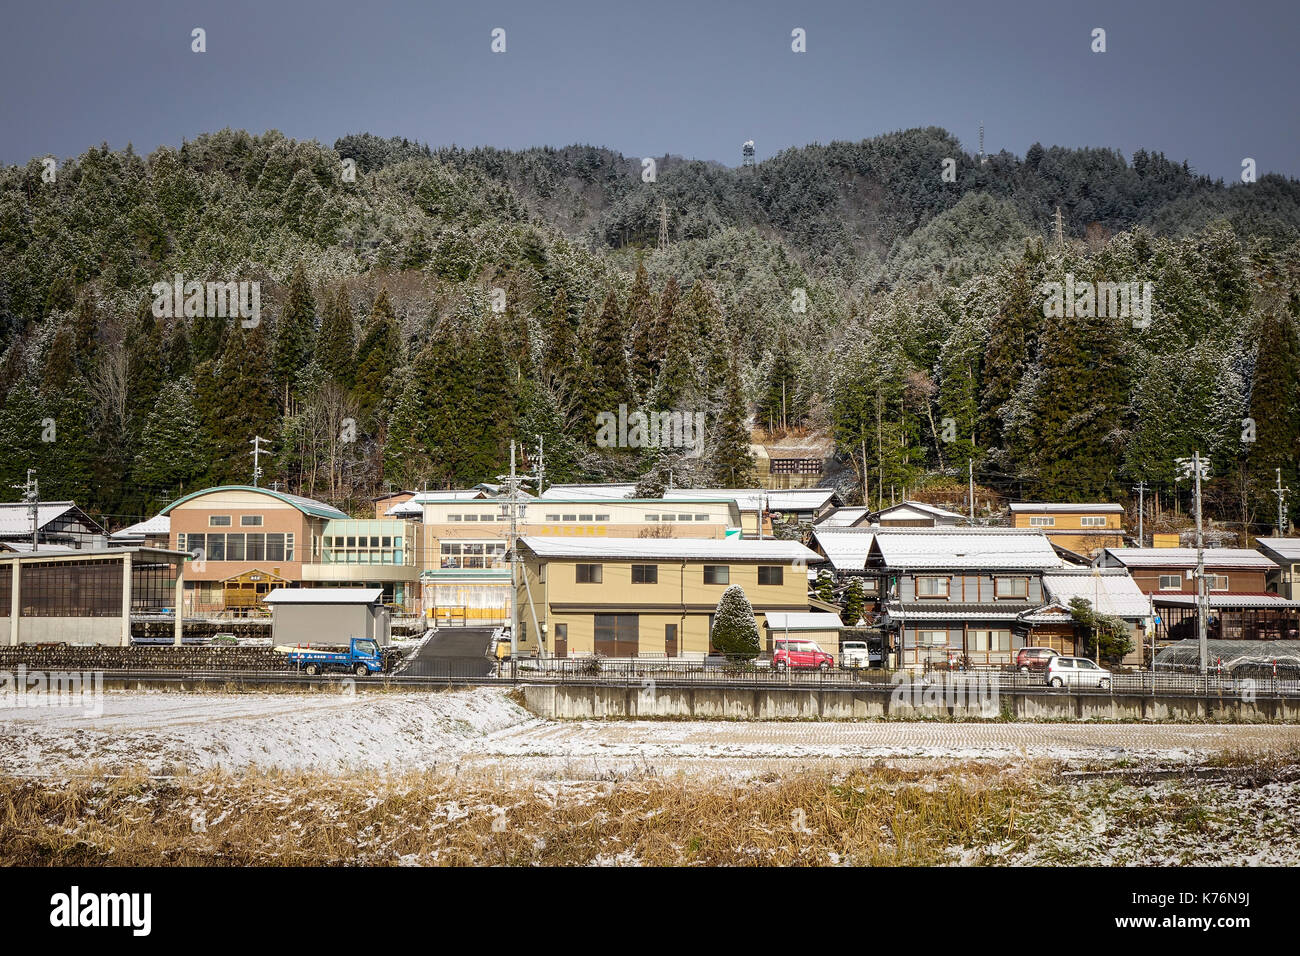 Nagano, Japan - Dec 29, 2015. A village at winter in Nagano, Japan. Nagano Prefecture (Nagano-ken) is a landlocked prefecture of Japan located in the  Stock Photo